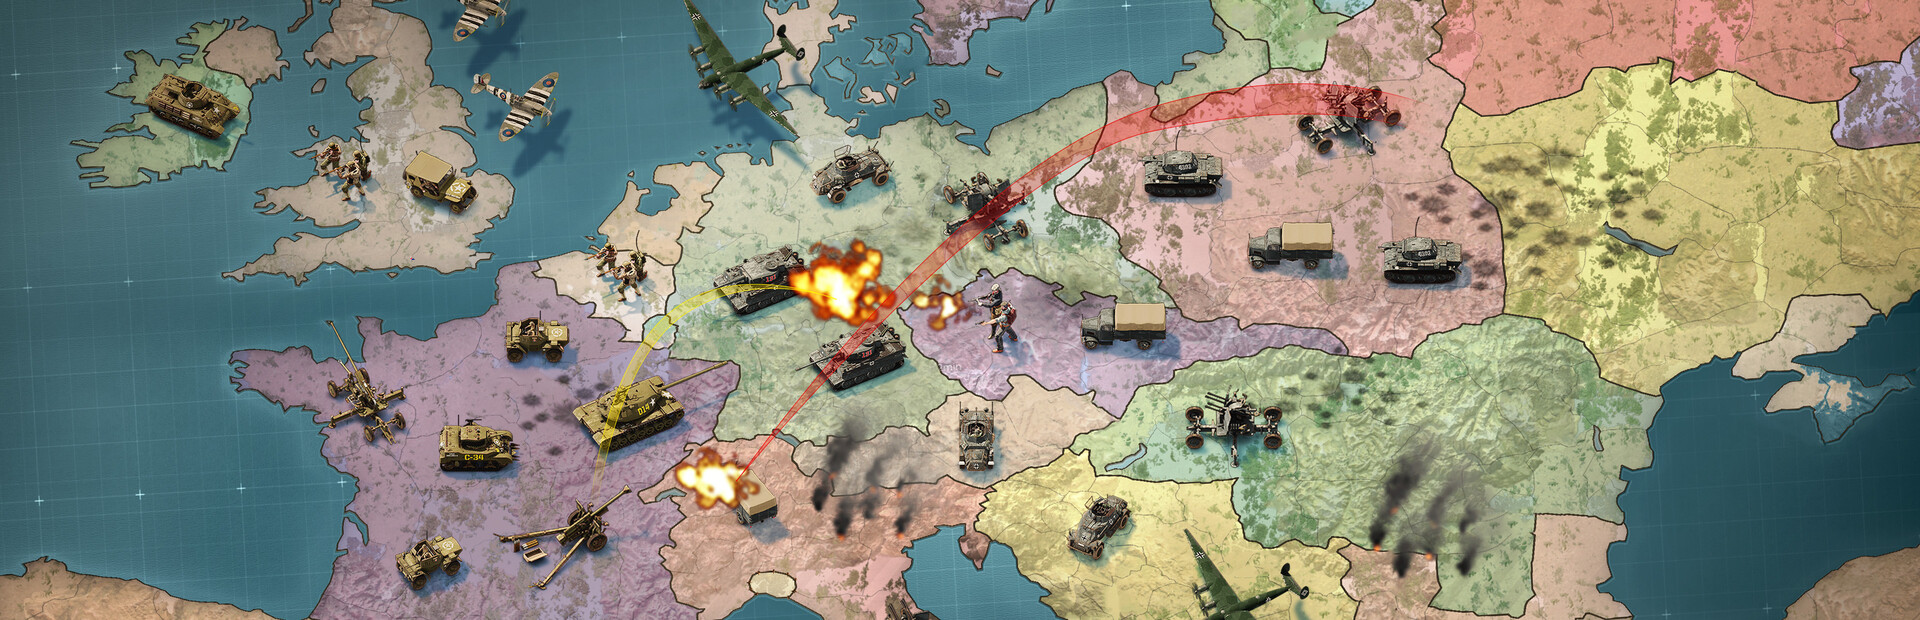 Call of War: World War 2 cover image